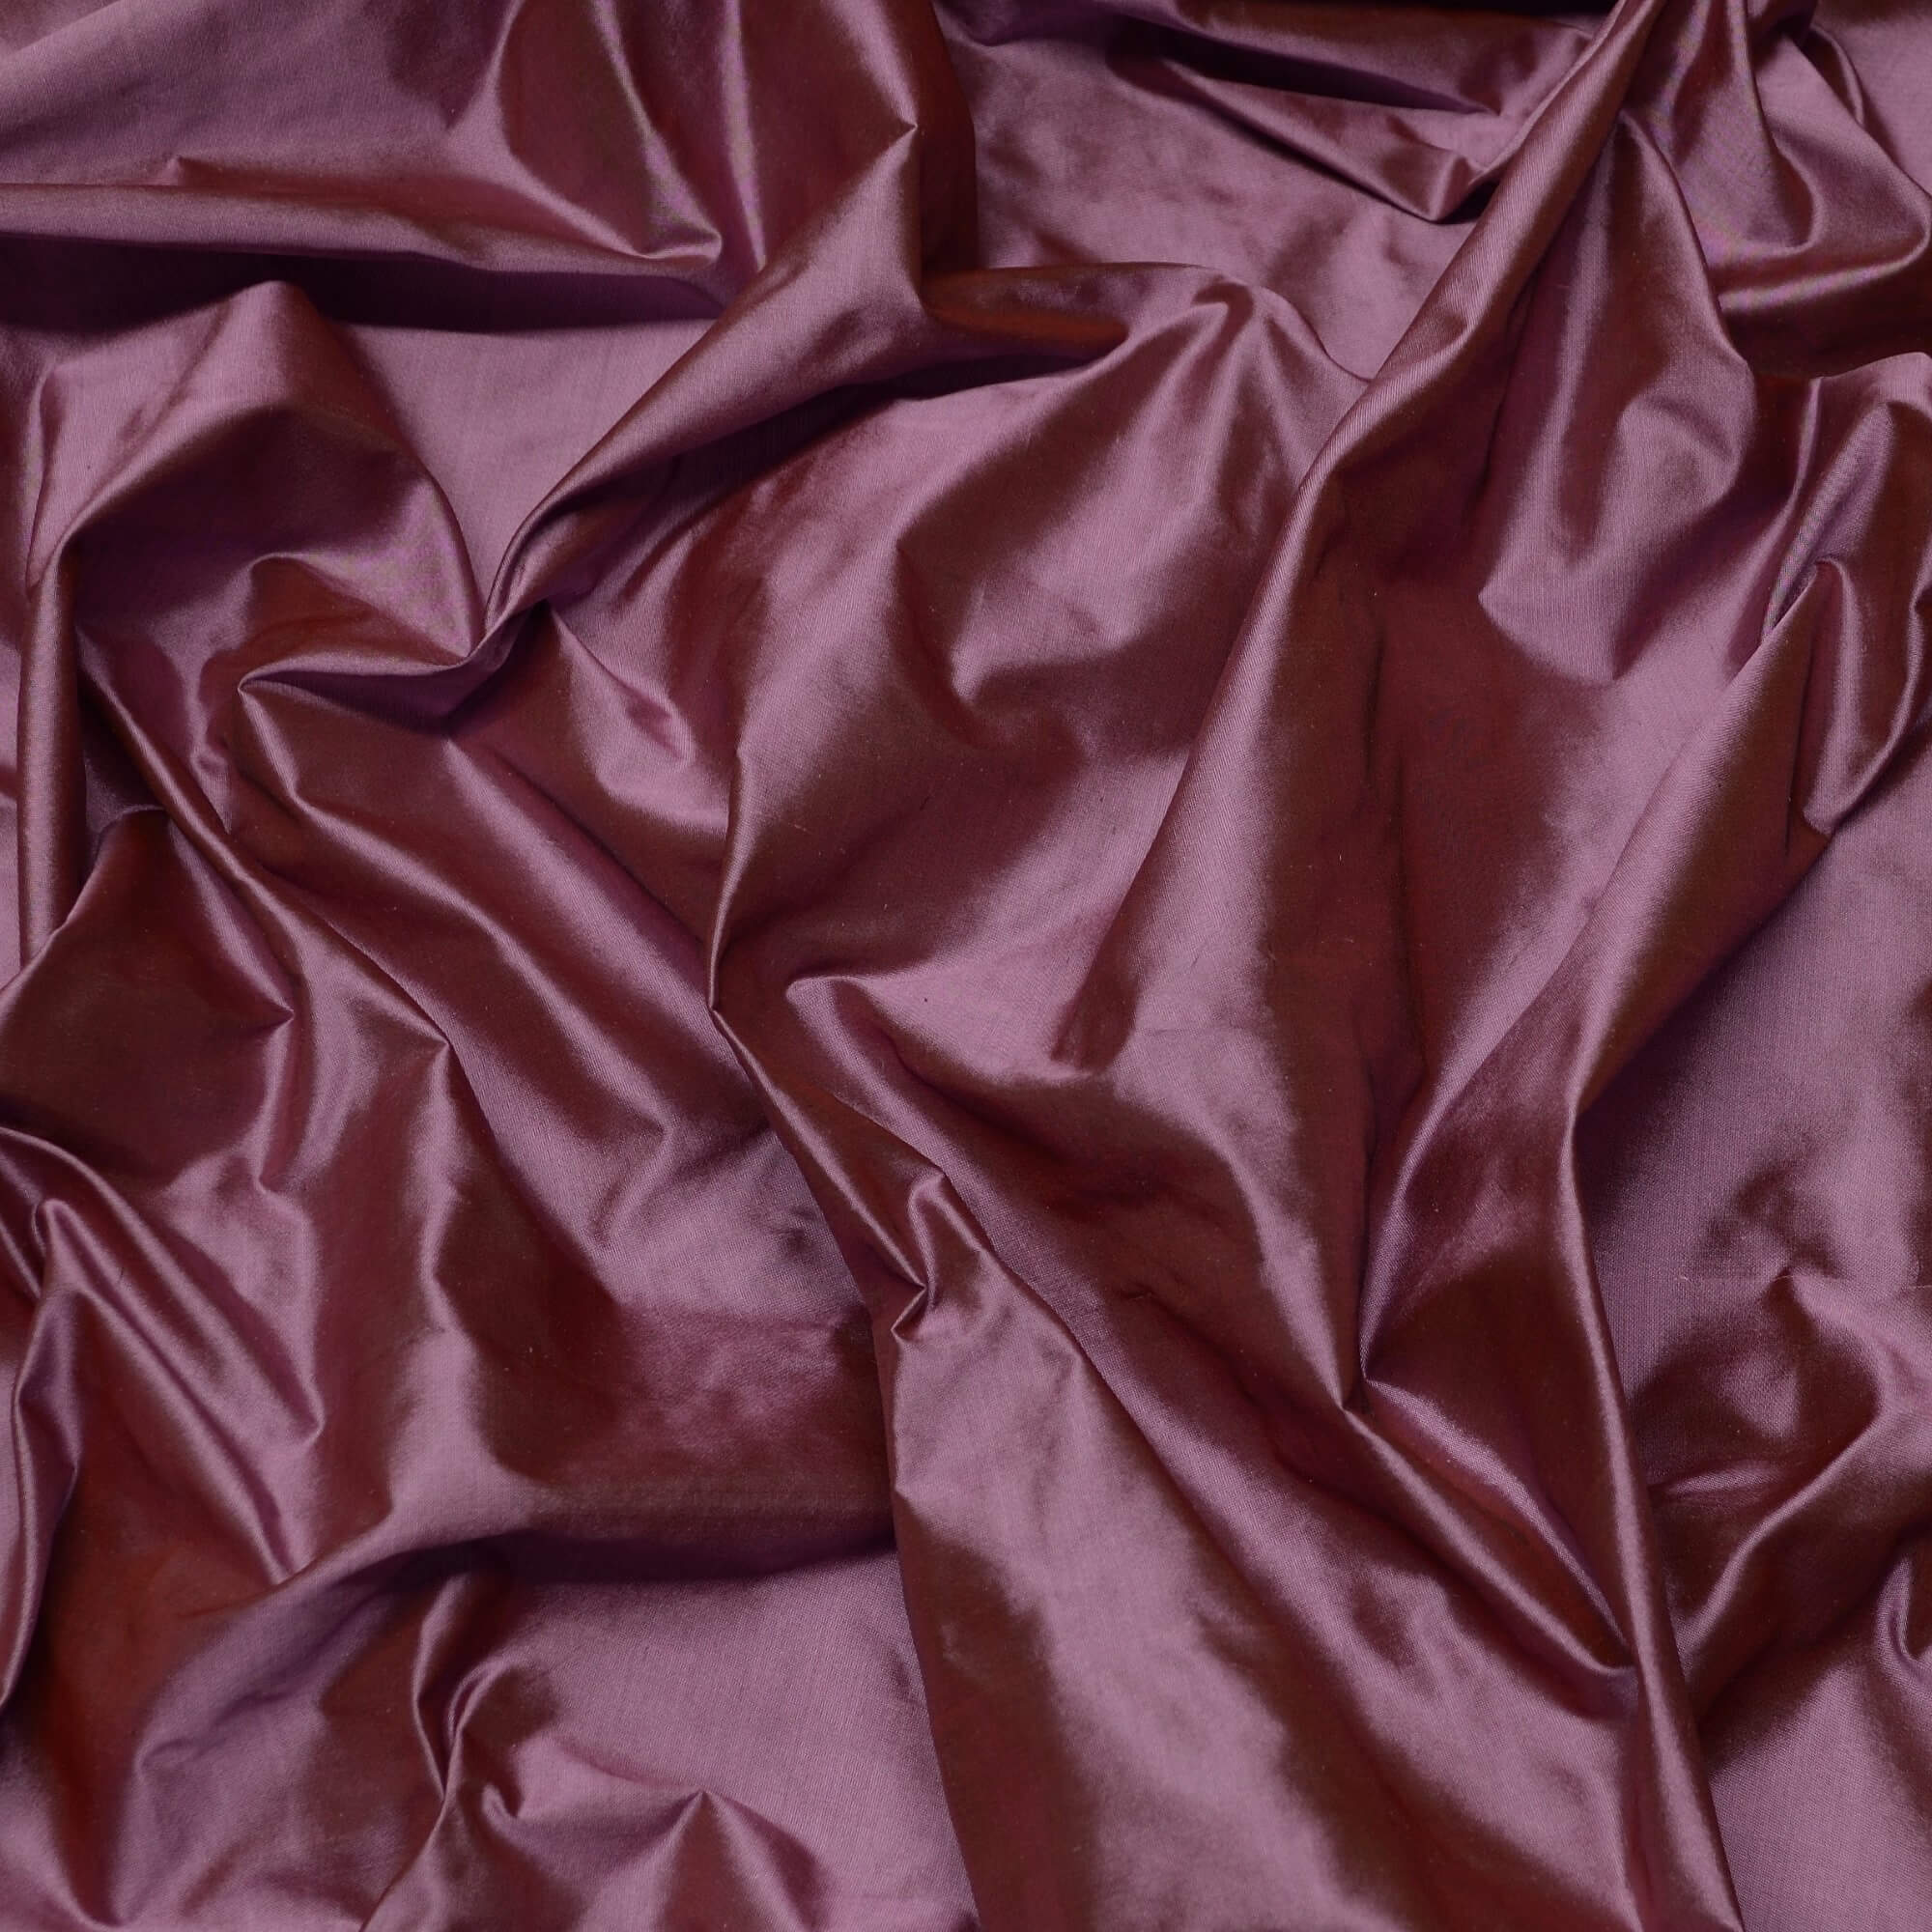 TS-7308: Mauve Tissue Taffeta 100% Silk - Silks Unlimited